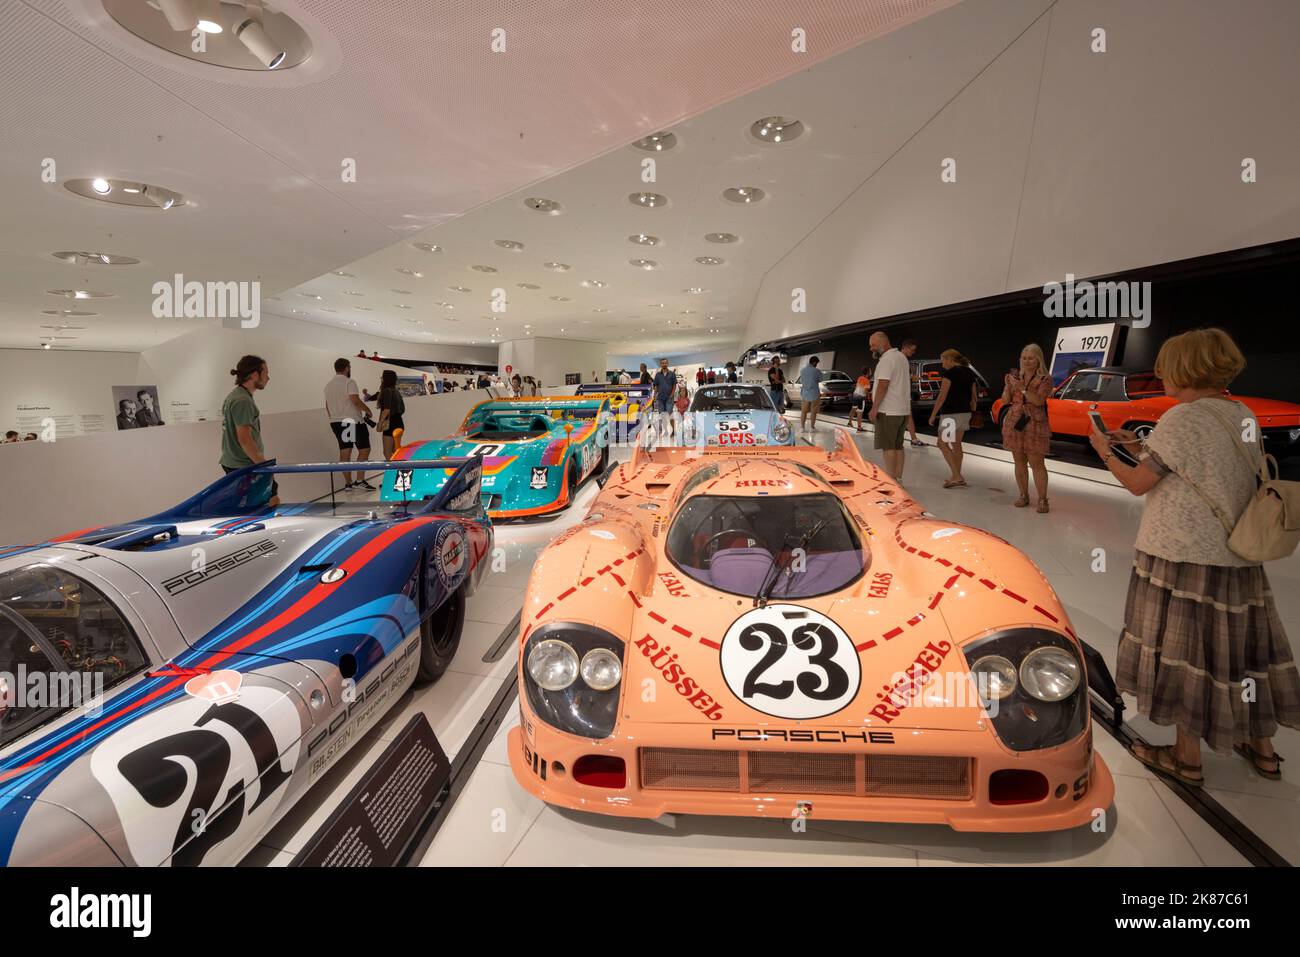 Porsche racing cars, The Porsche Museum, Stuttgart, Germany Stock Photo